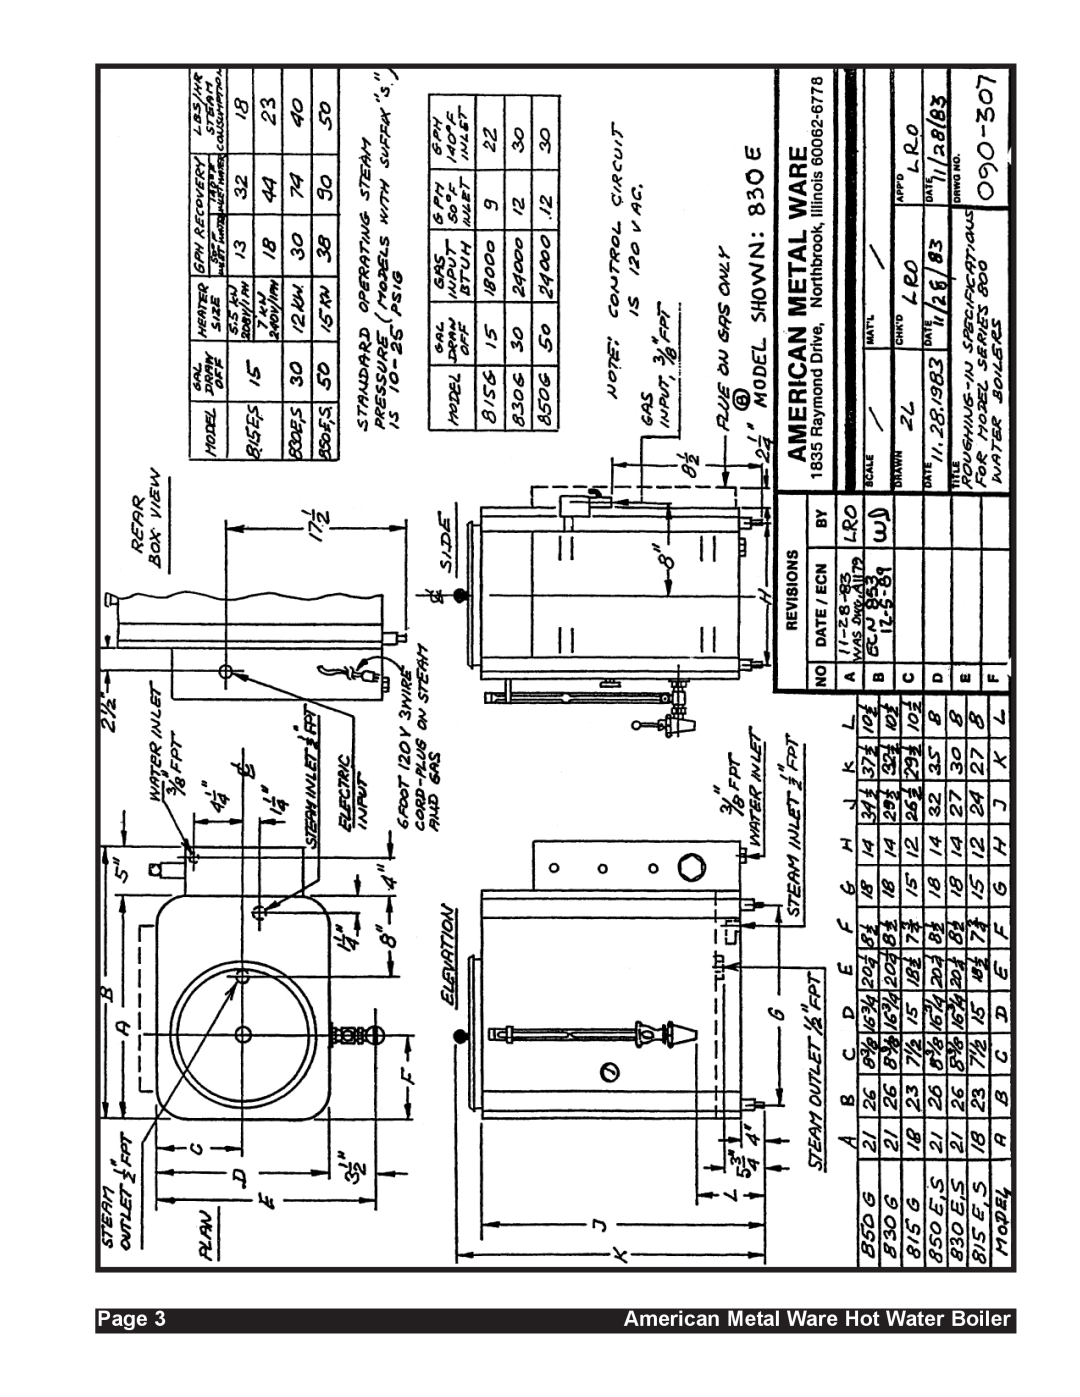 Grindmaster 830, 815, 850 service manual Page, American Metal Ware Hot Water Boiler 